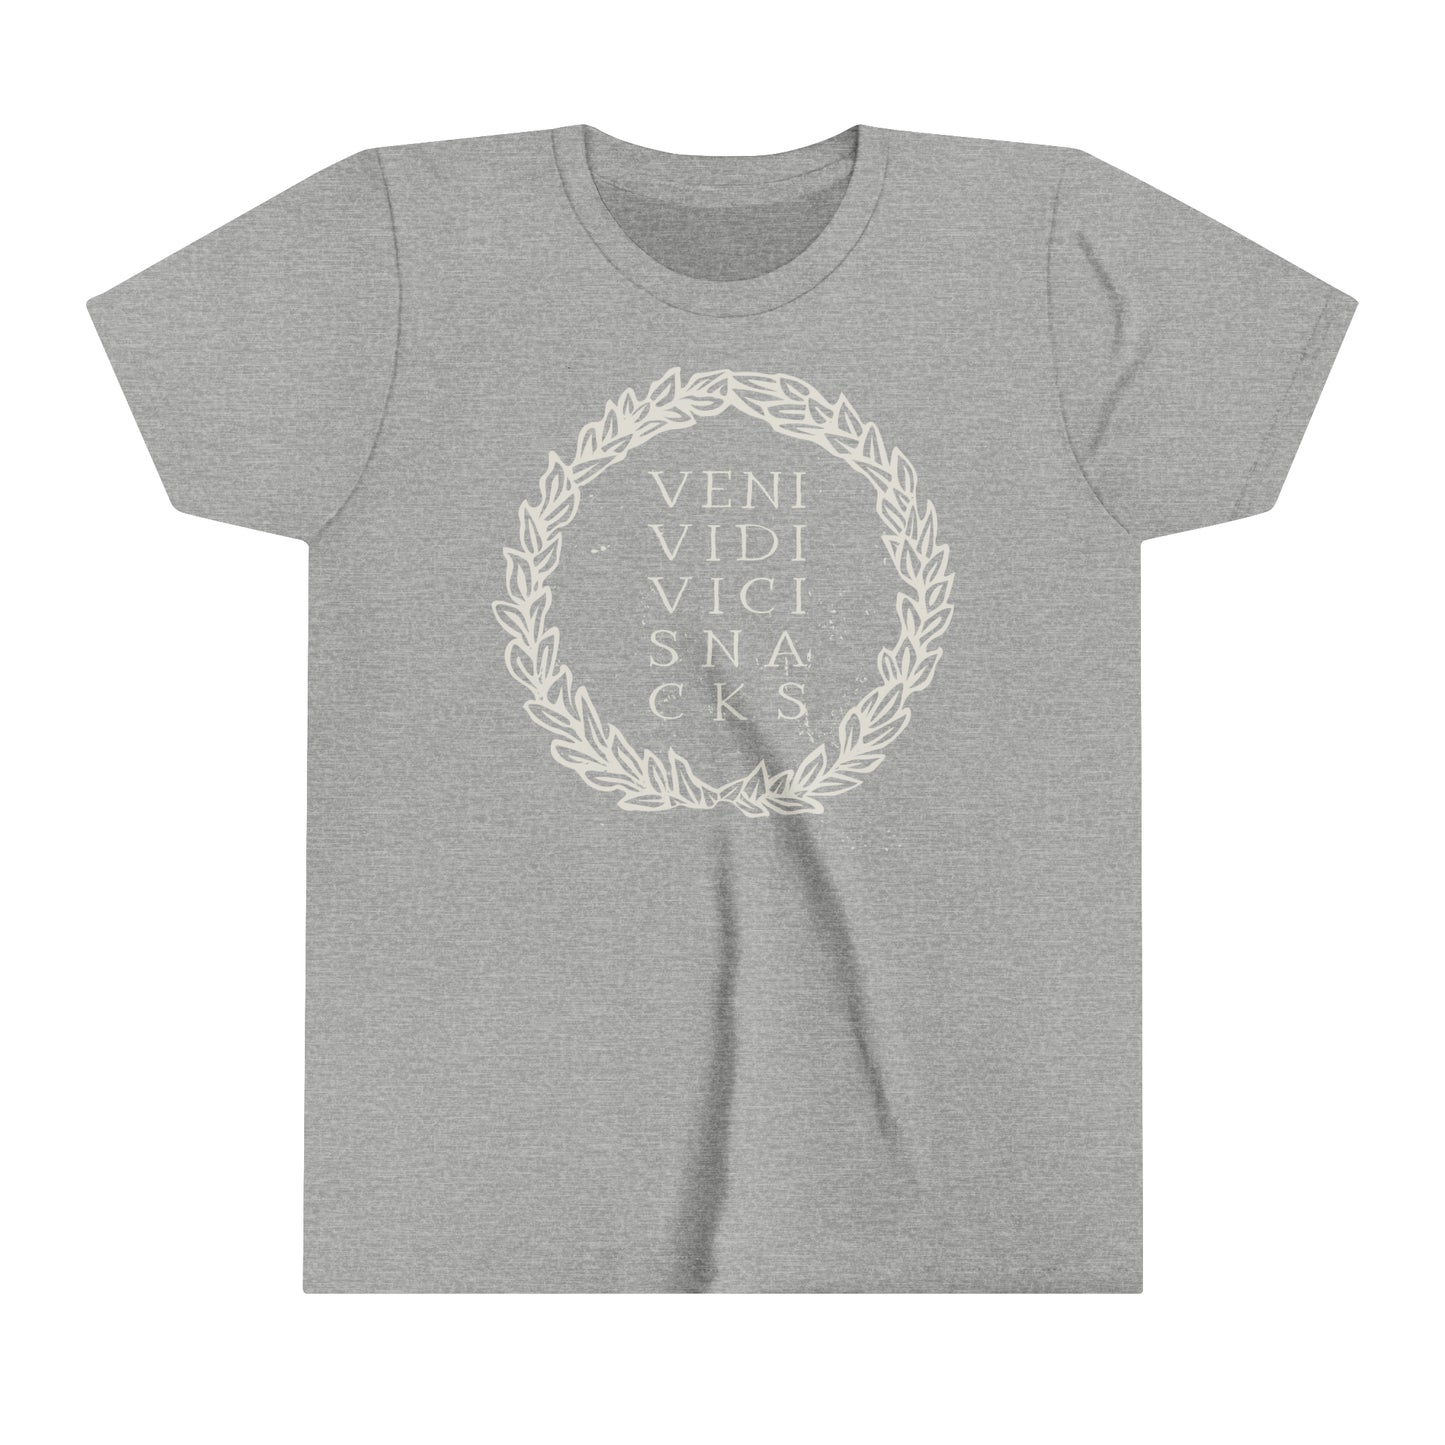 Veni Vidi Vici Snacks Front Print in Soft, Lightweight Cotton Kids Tee